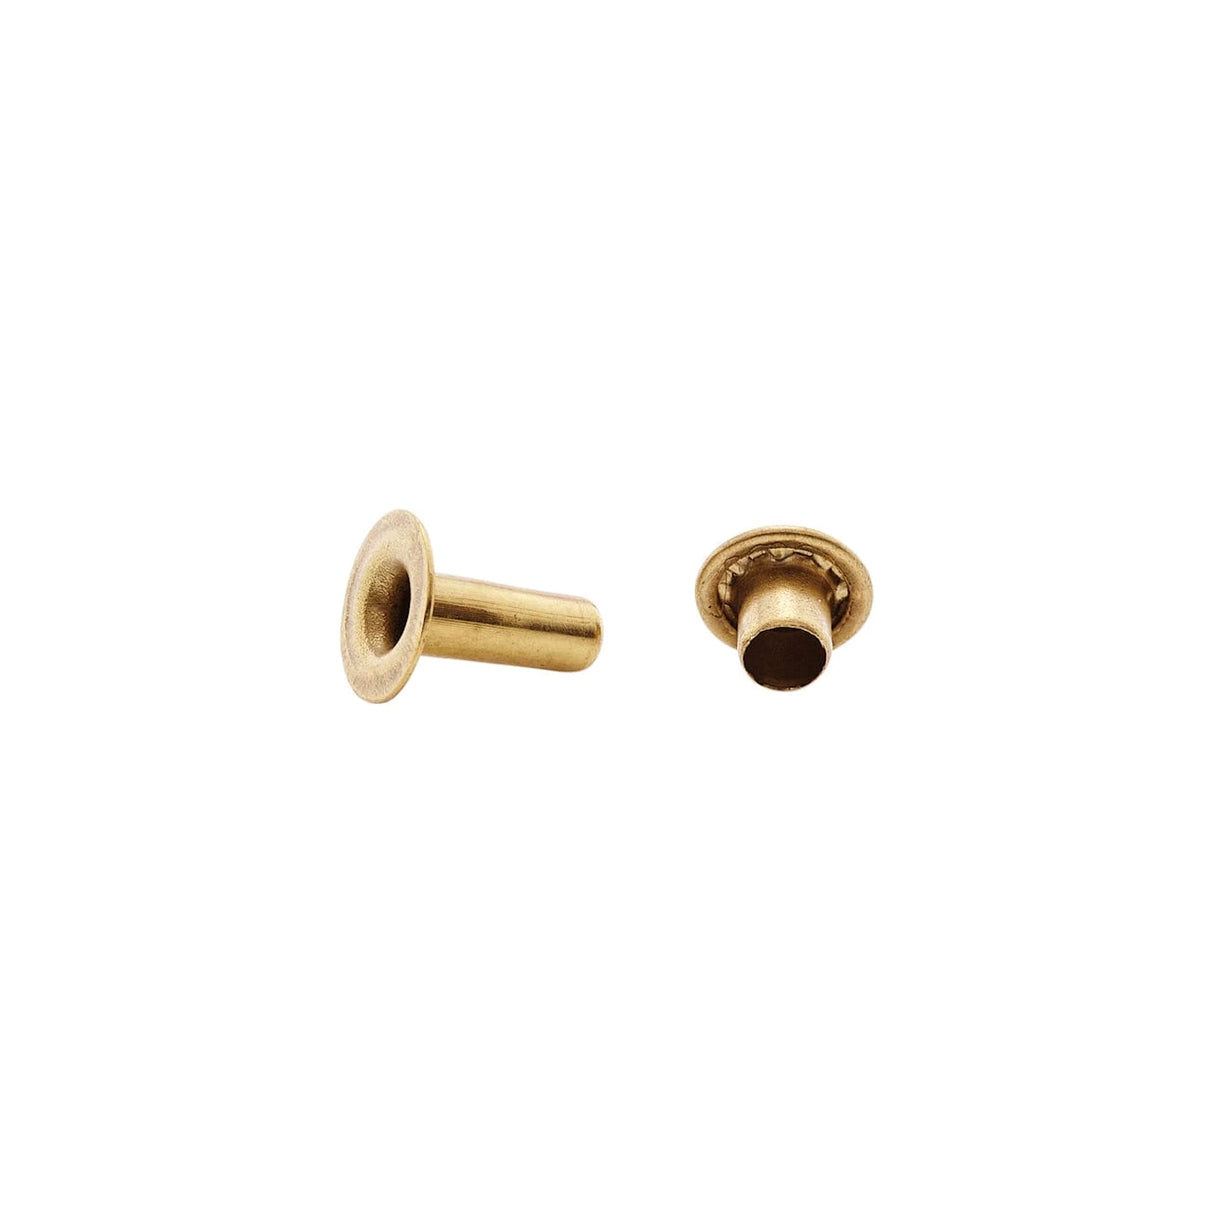 9mm Brass, Single Cap Jiffy Rivet, Solid Brass-100ct, #NB309S-SB